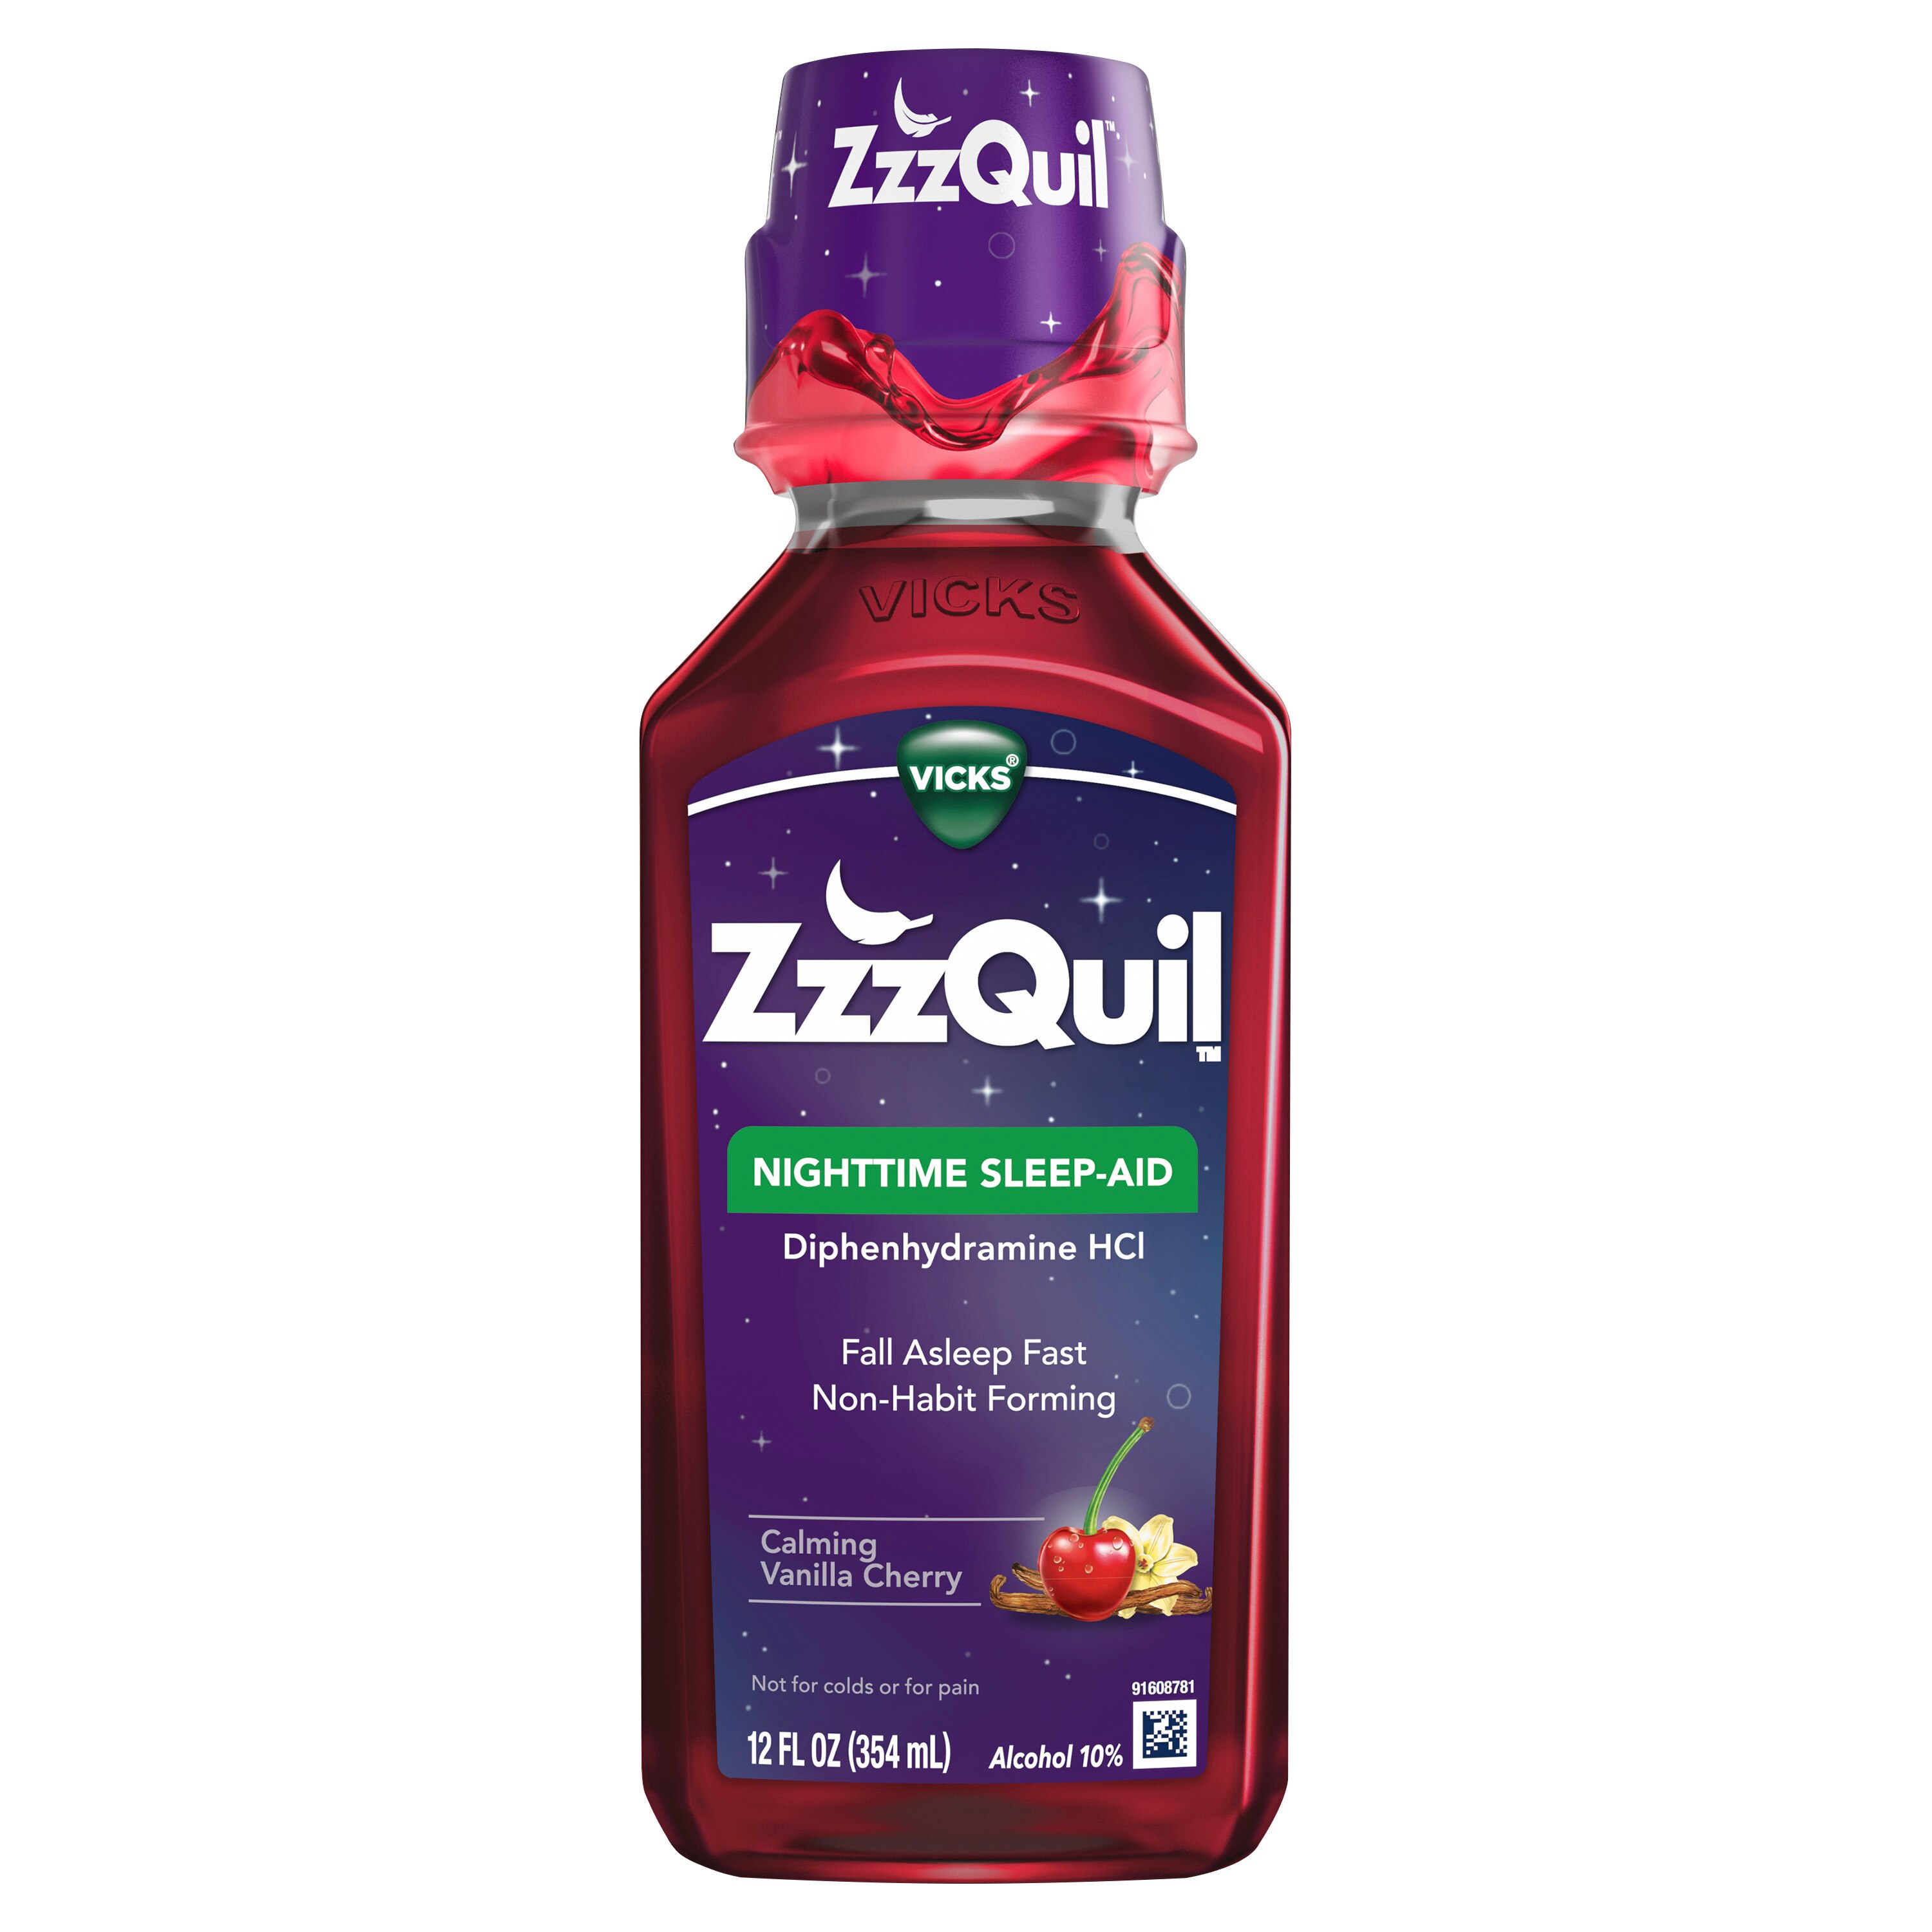 ZzzQuil Nighttime - Estimulante de ayuda para dormir, uso nocturno, Calmin